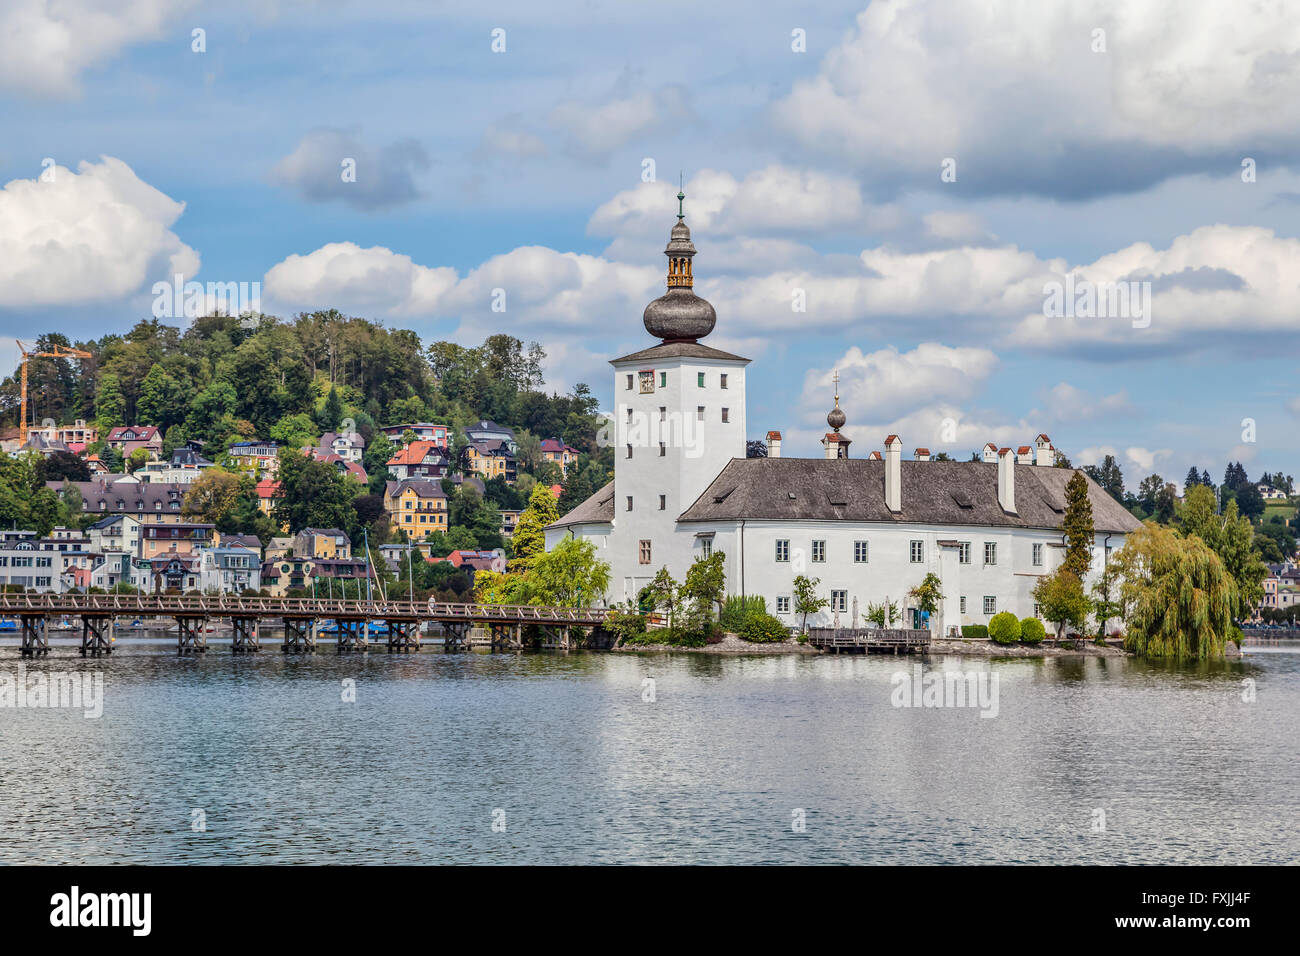 Schloss Ort on Traunsee lake near Gmunden, Austria Stock Photo